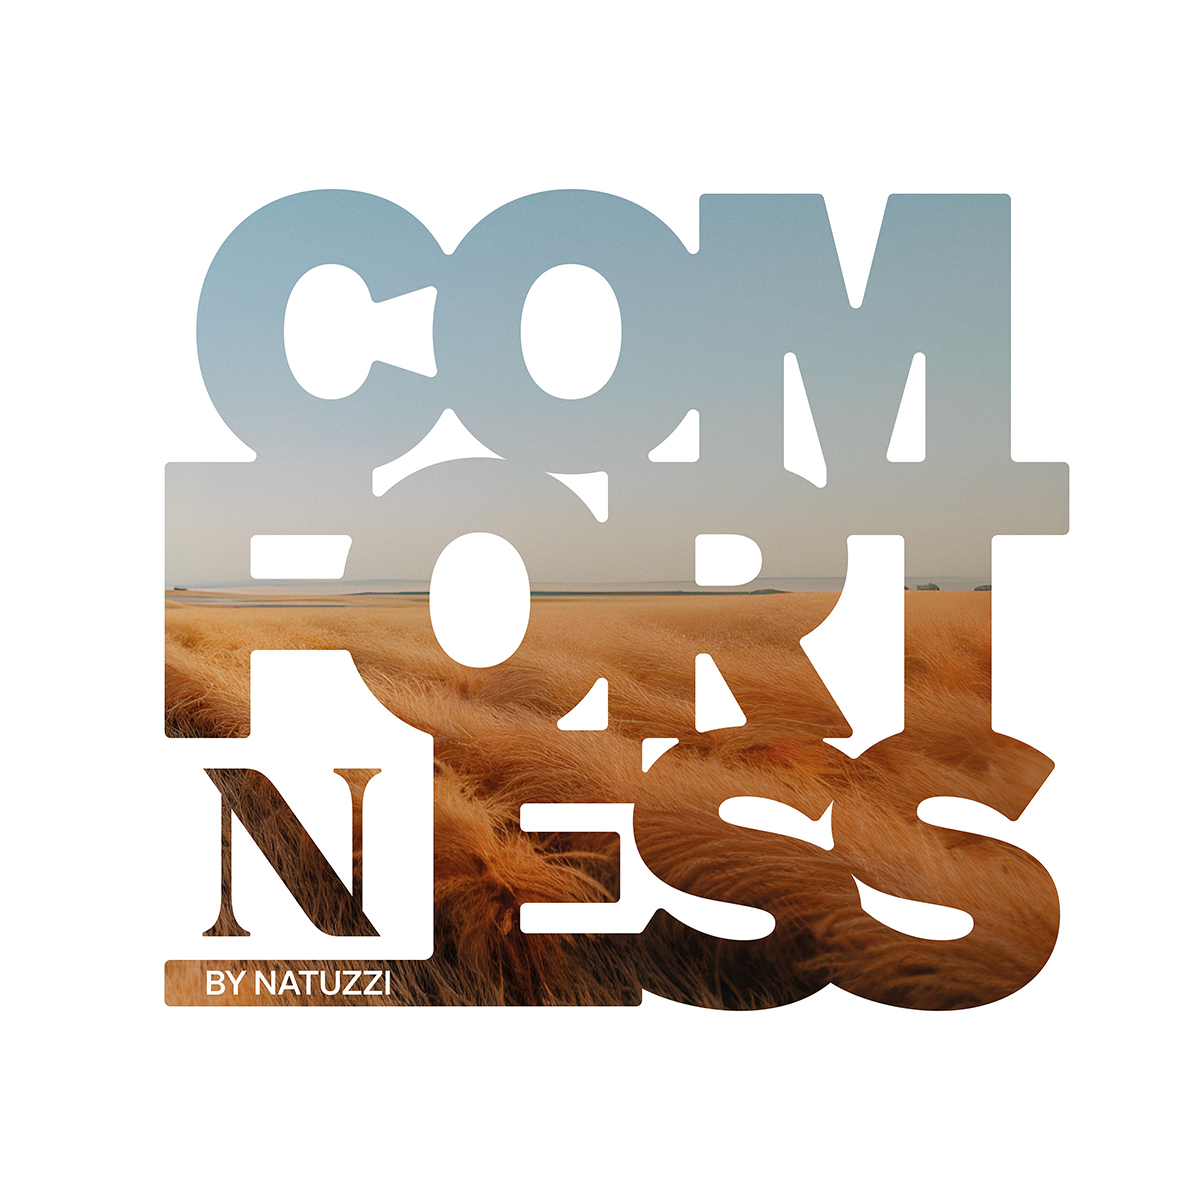 Natuzzi editorial - Comfortness & Wellness